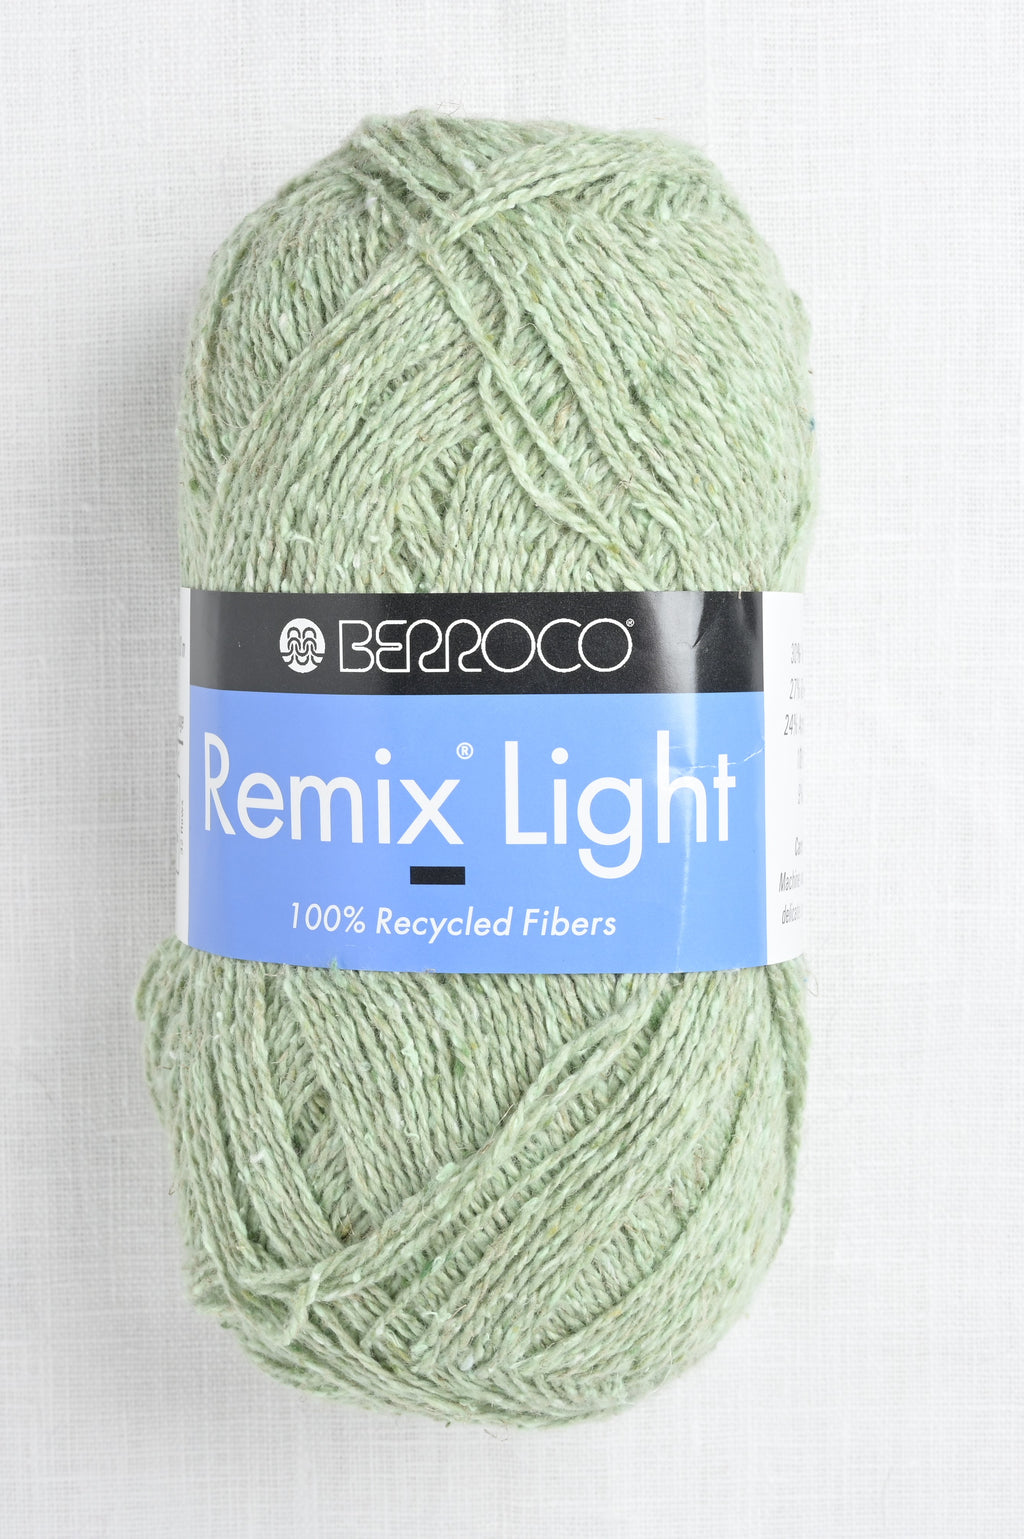 Berroco Remix Light 6962 Leaf